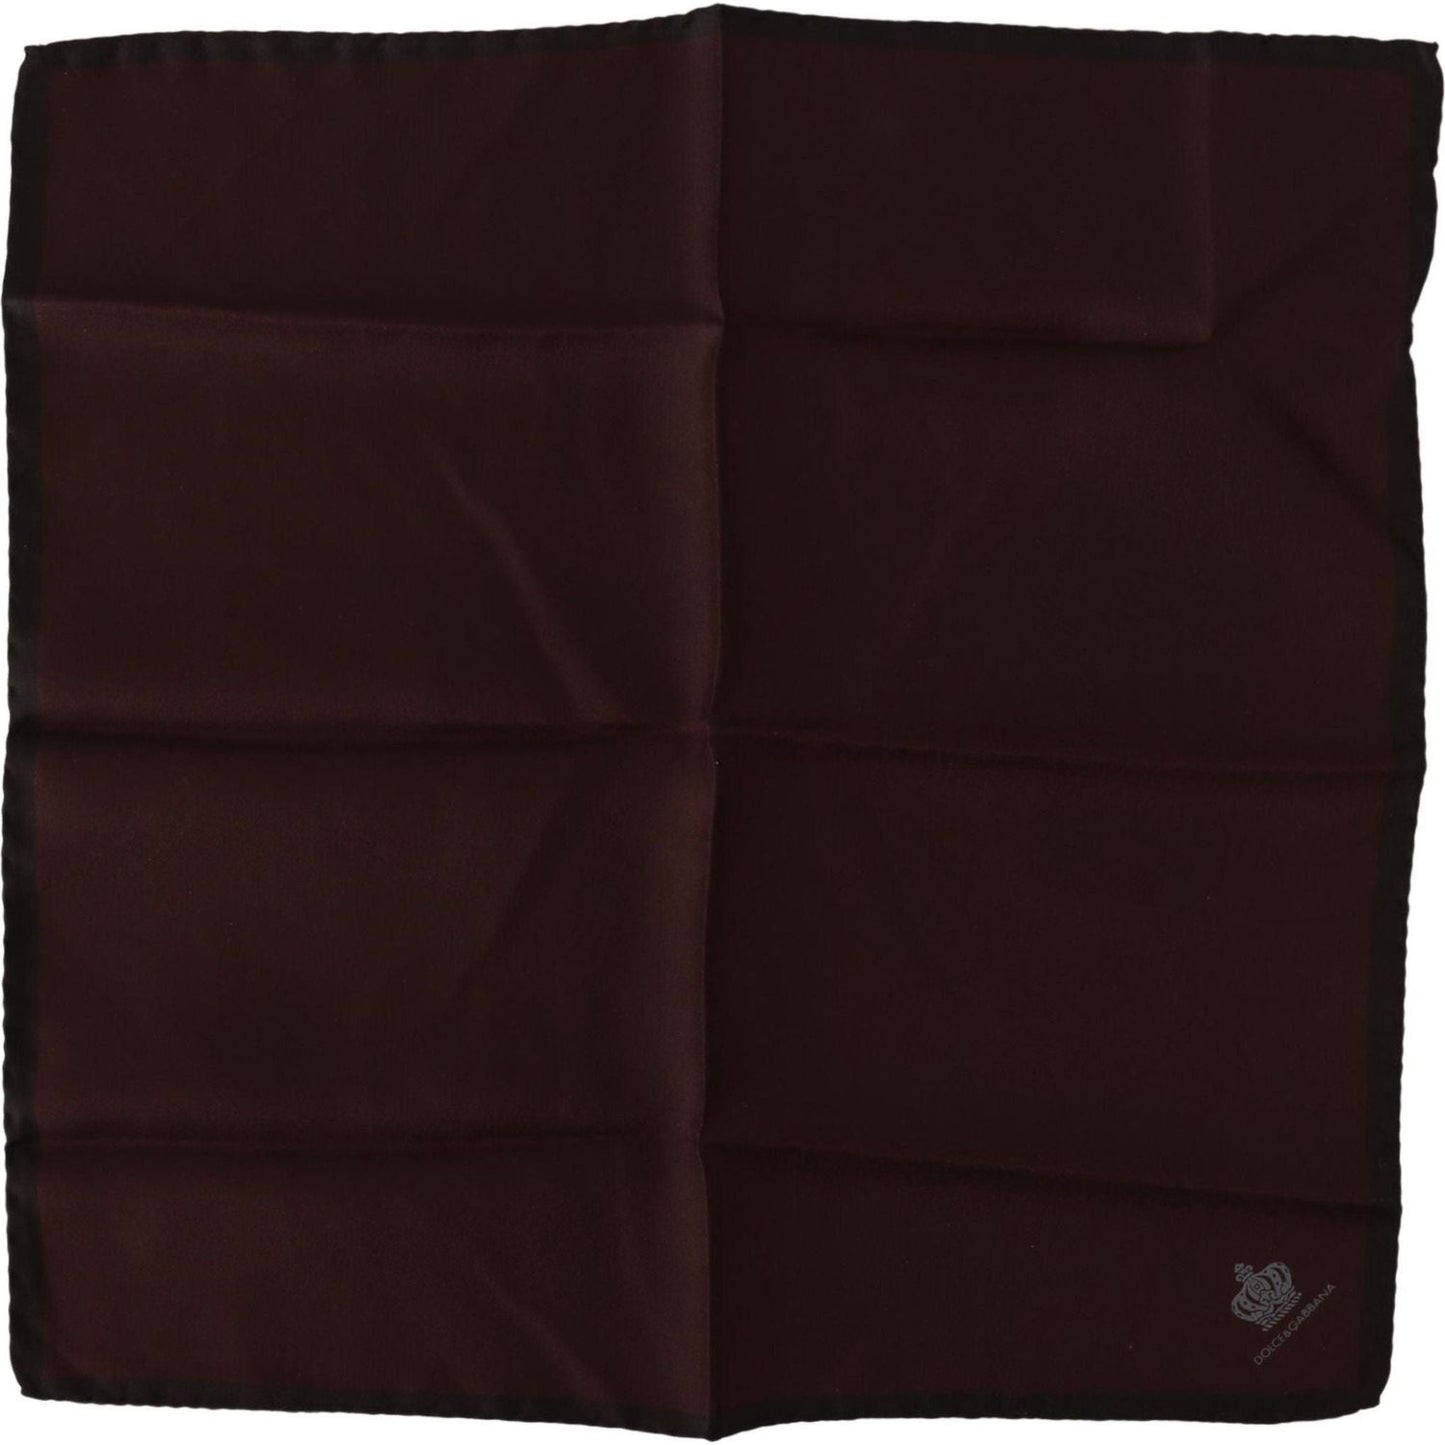 Dolce & Gabbana Maroon Square Handkerchief 100% Silk Scarf maroon-square-handkerchief-100-silk-scarf IMG_8311-824ef60c-618.jpg